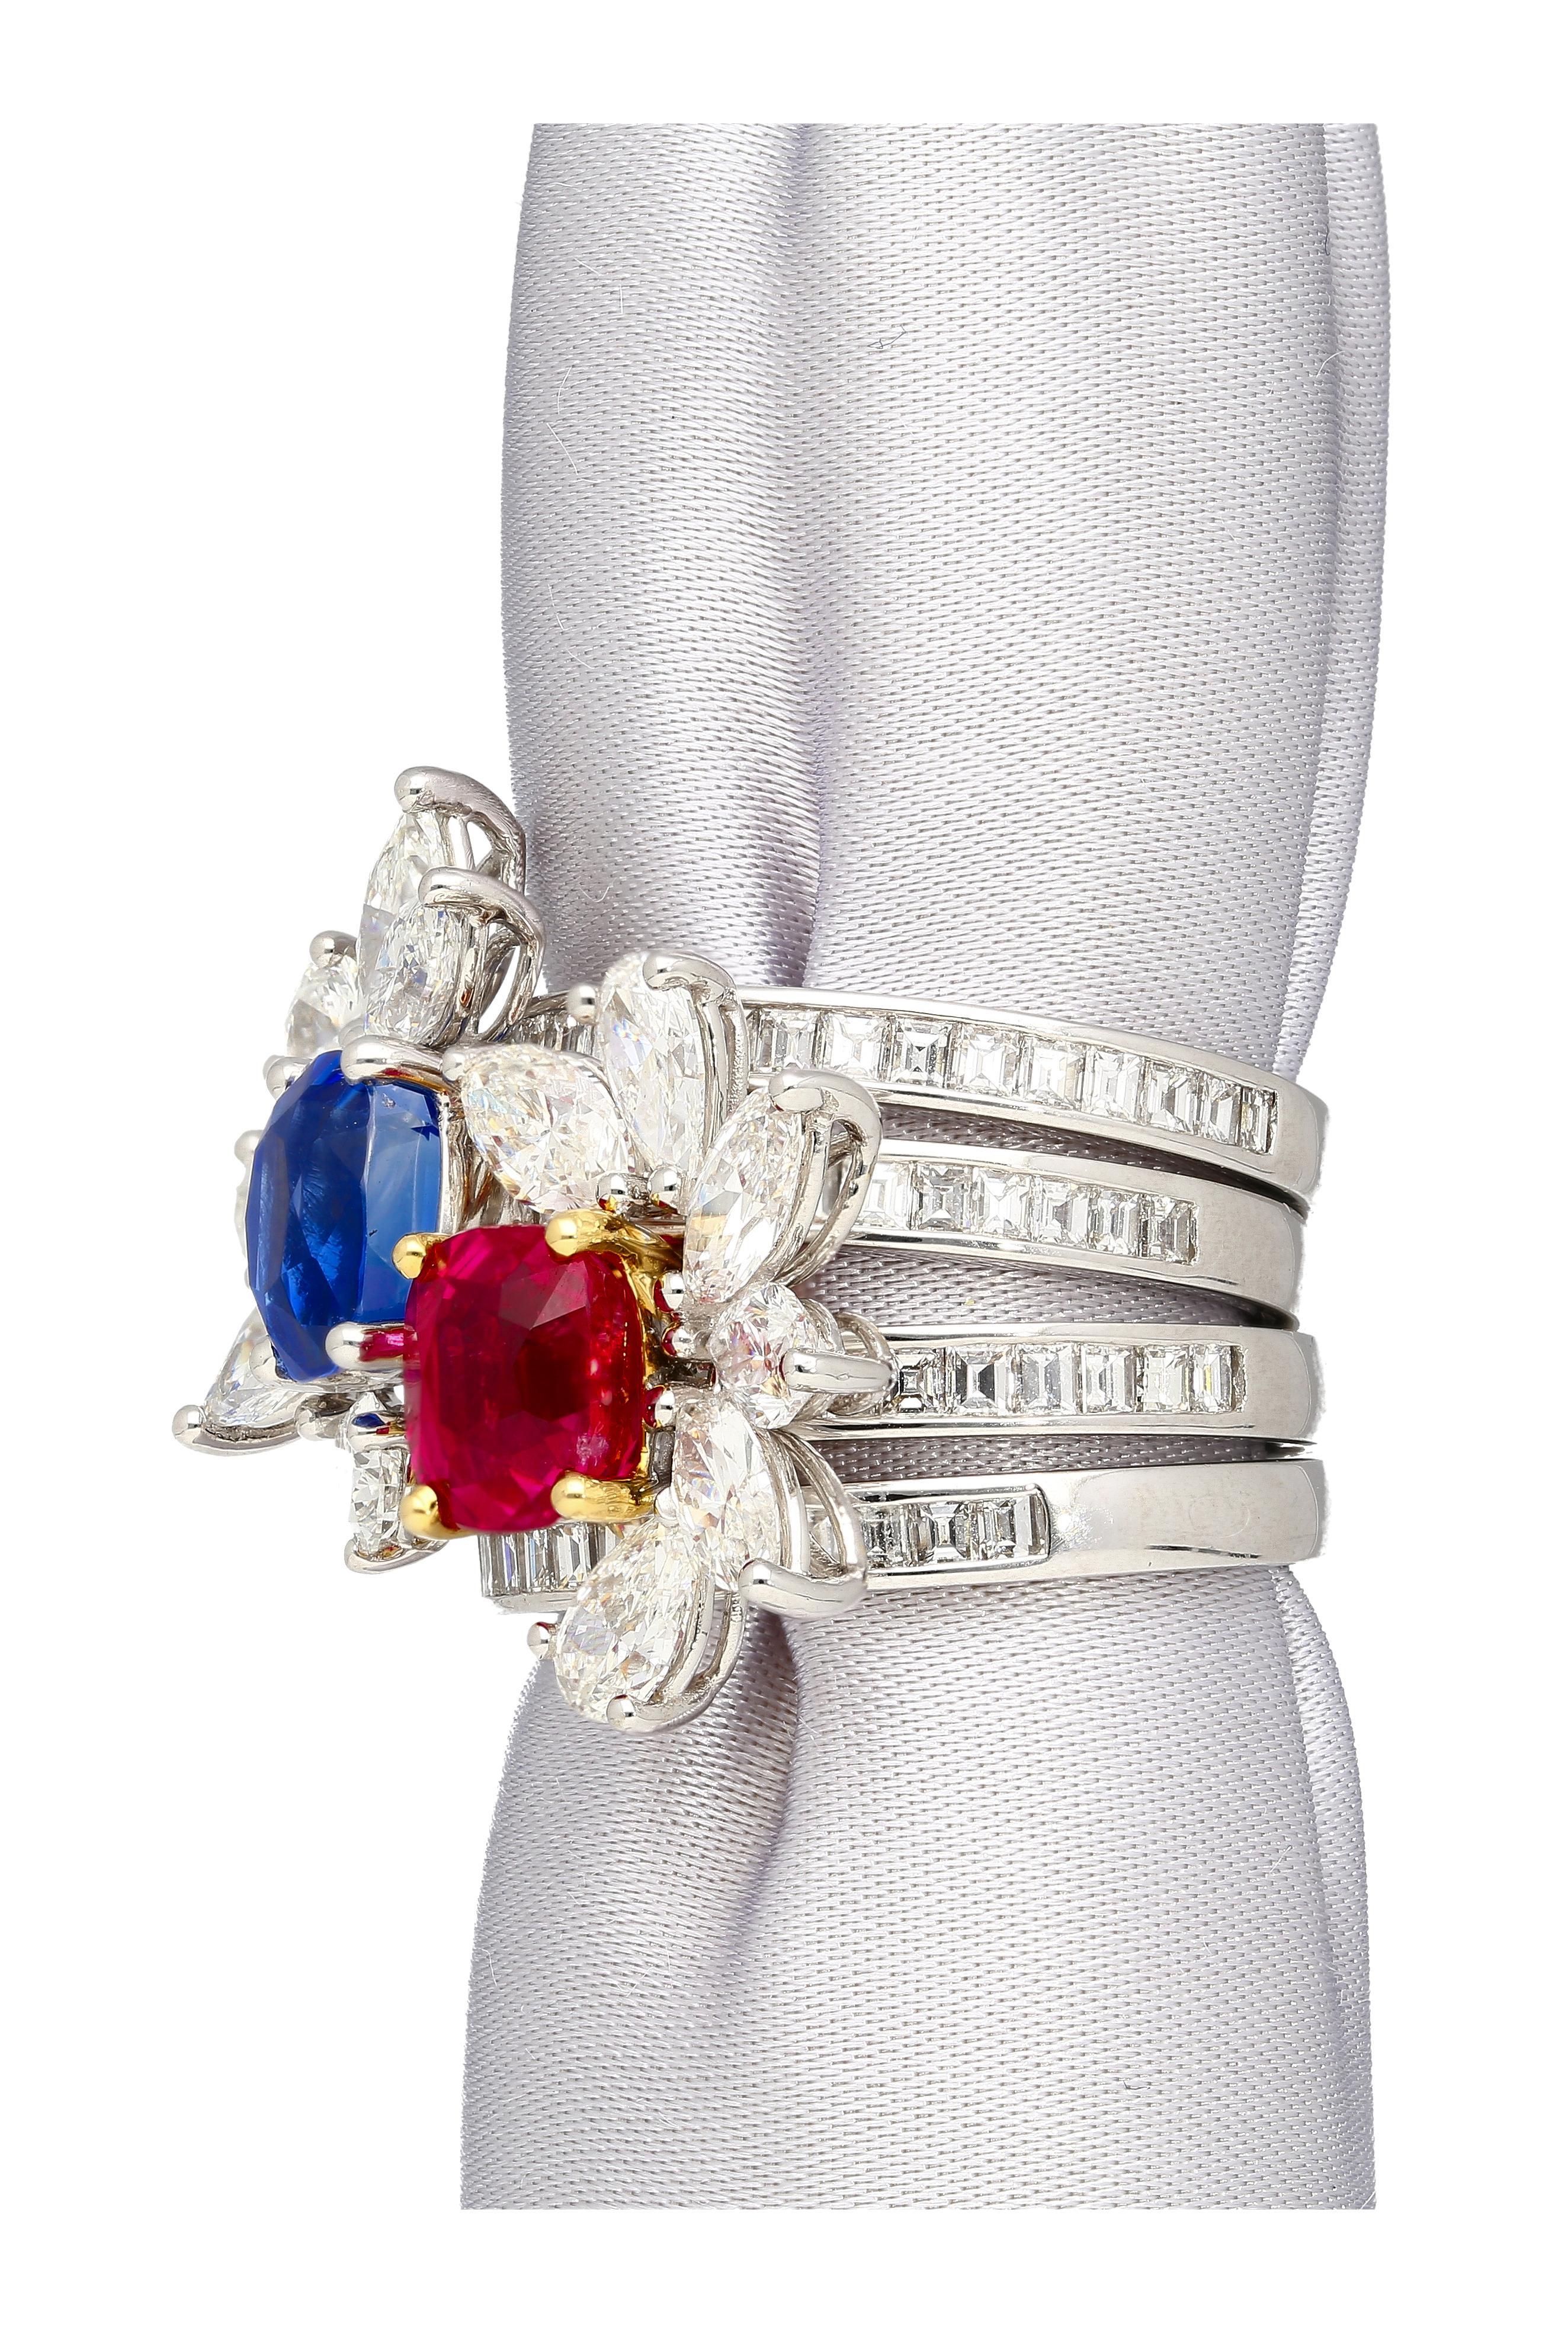 AGL Certified 8 Carat No Heat Kashmir Sapphire, Burma Ruby, & Diamond Stack Ring For Sale 4